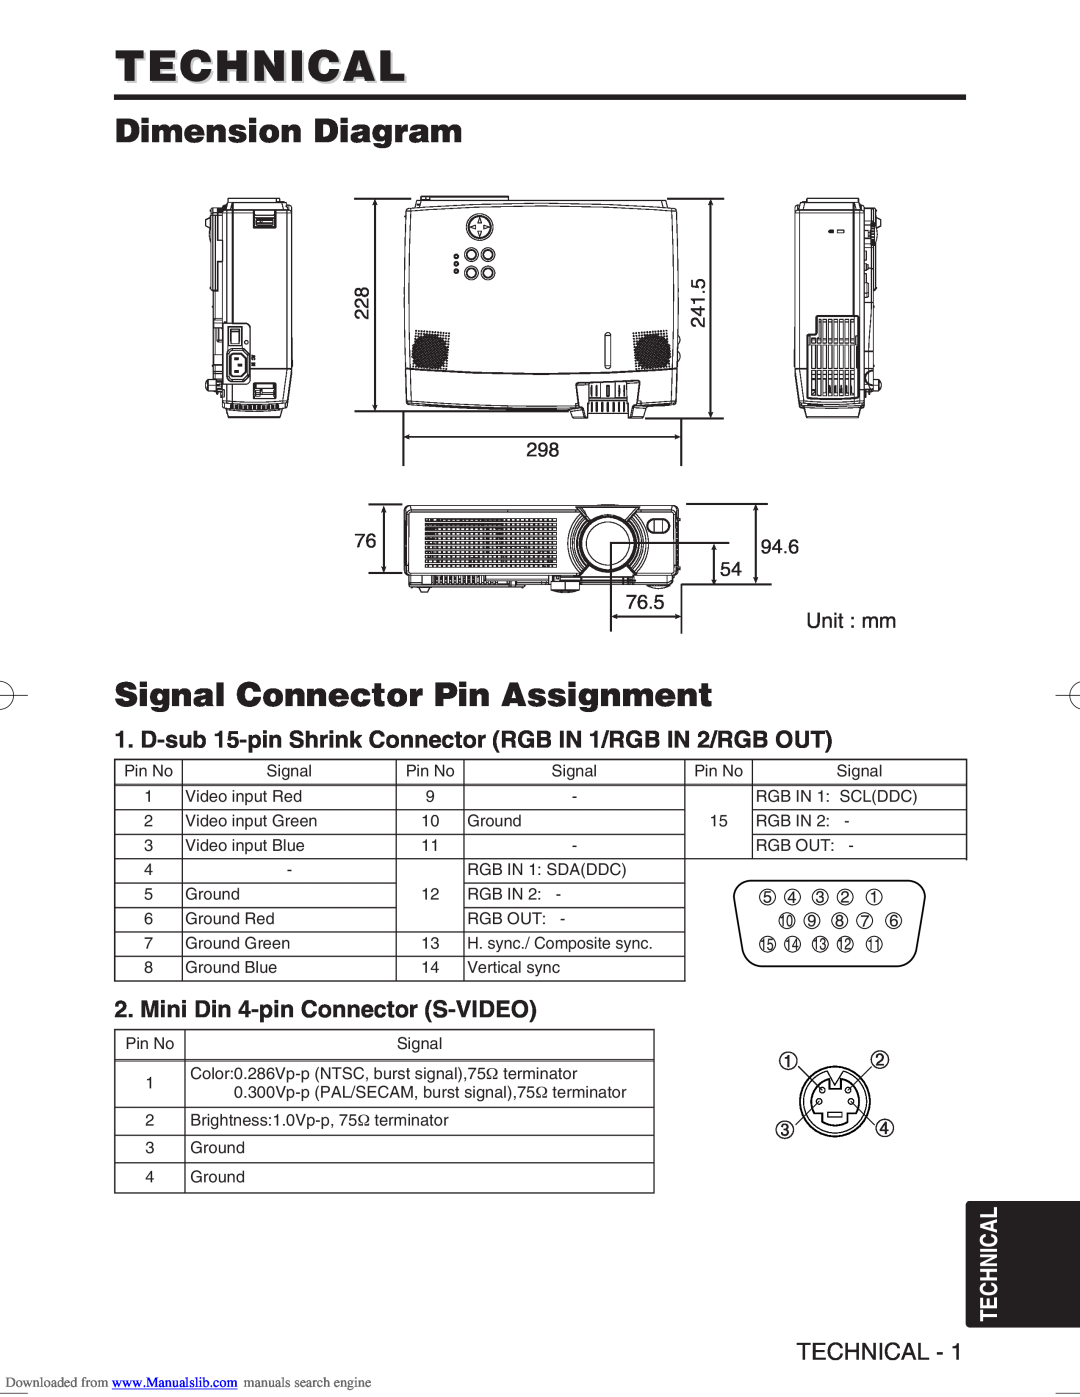 Hitachi CP-S370W Technical, Dimension Diagram, Signal Connector Pin Assignment, 1514, Mini Din 4-pin Connector S-VIDEO 